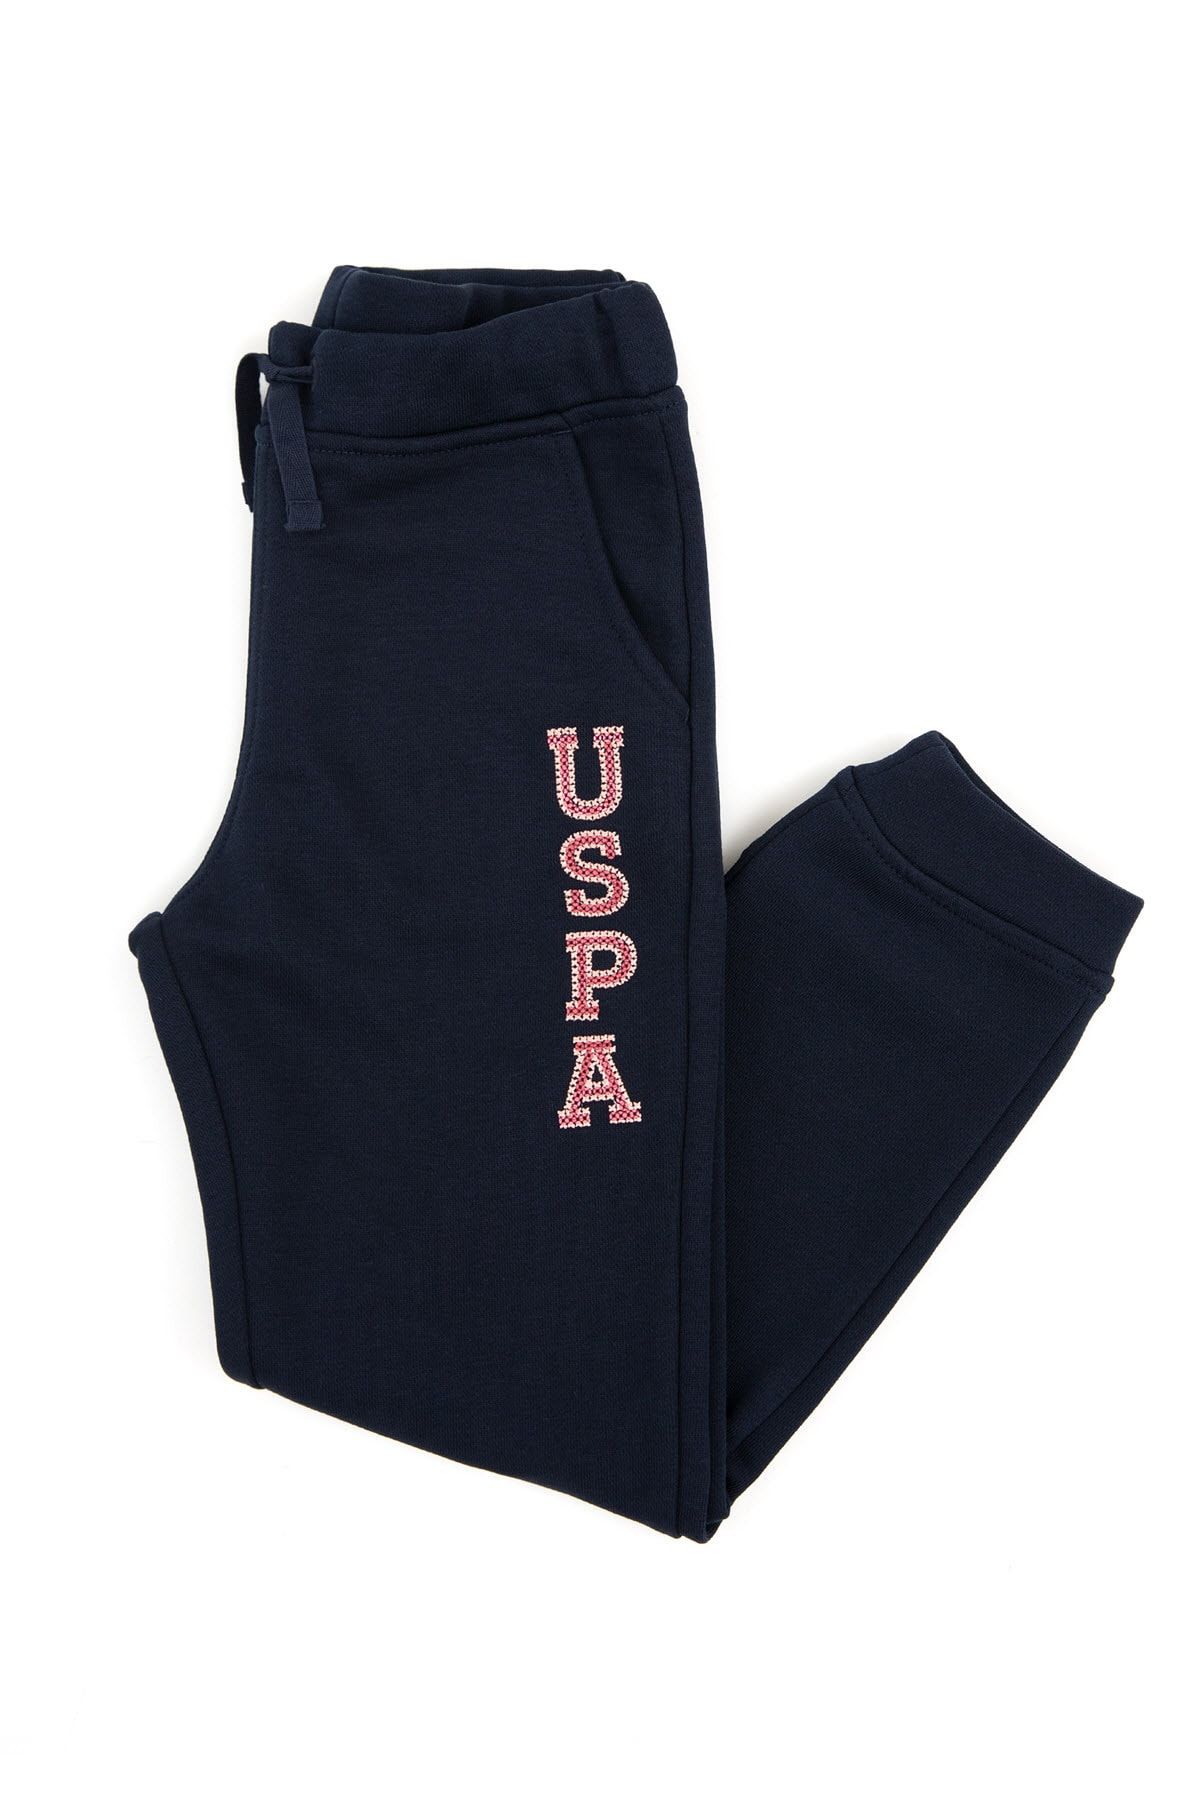 U.S. Polo Assn. Lacivert Kız Çocuk Örme Pantolon